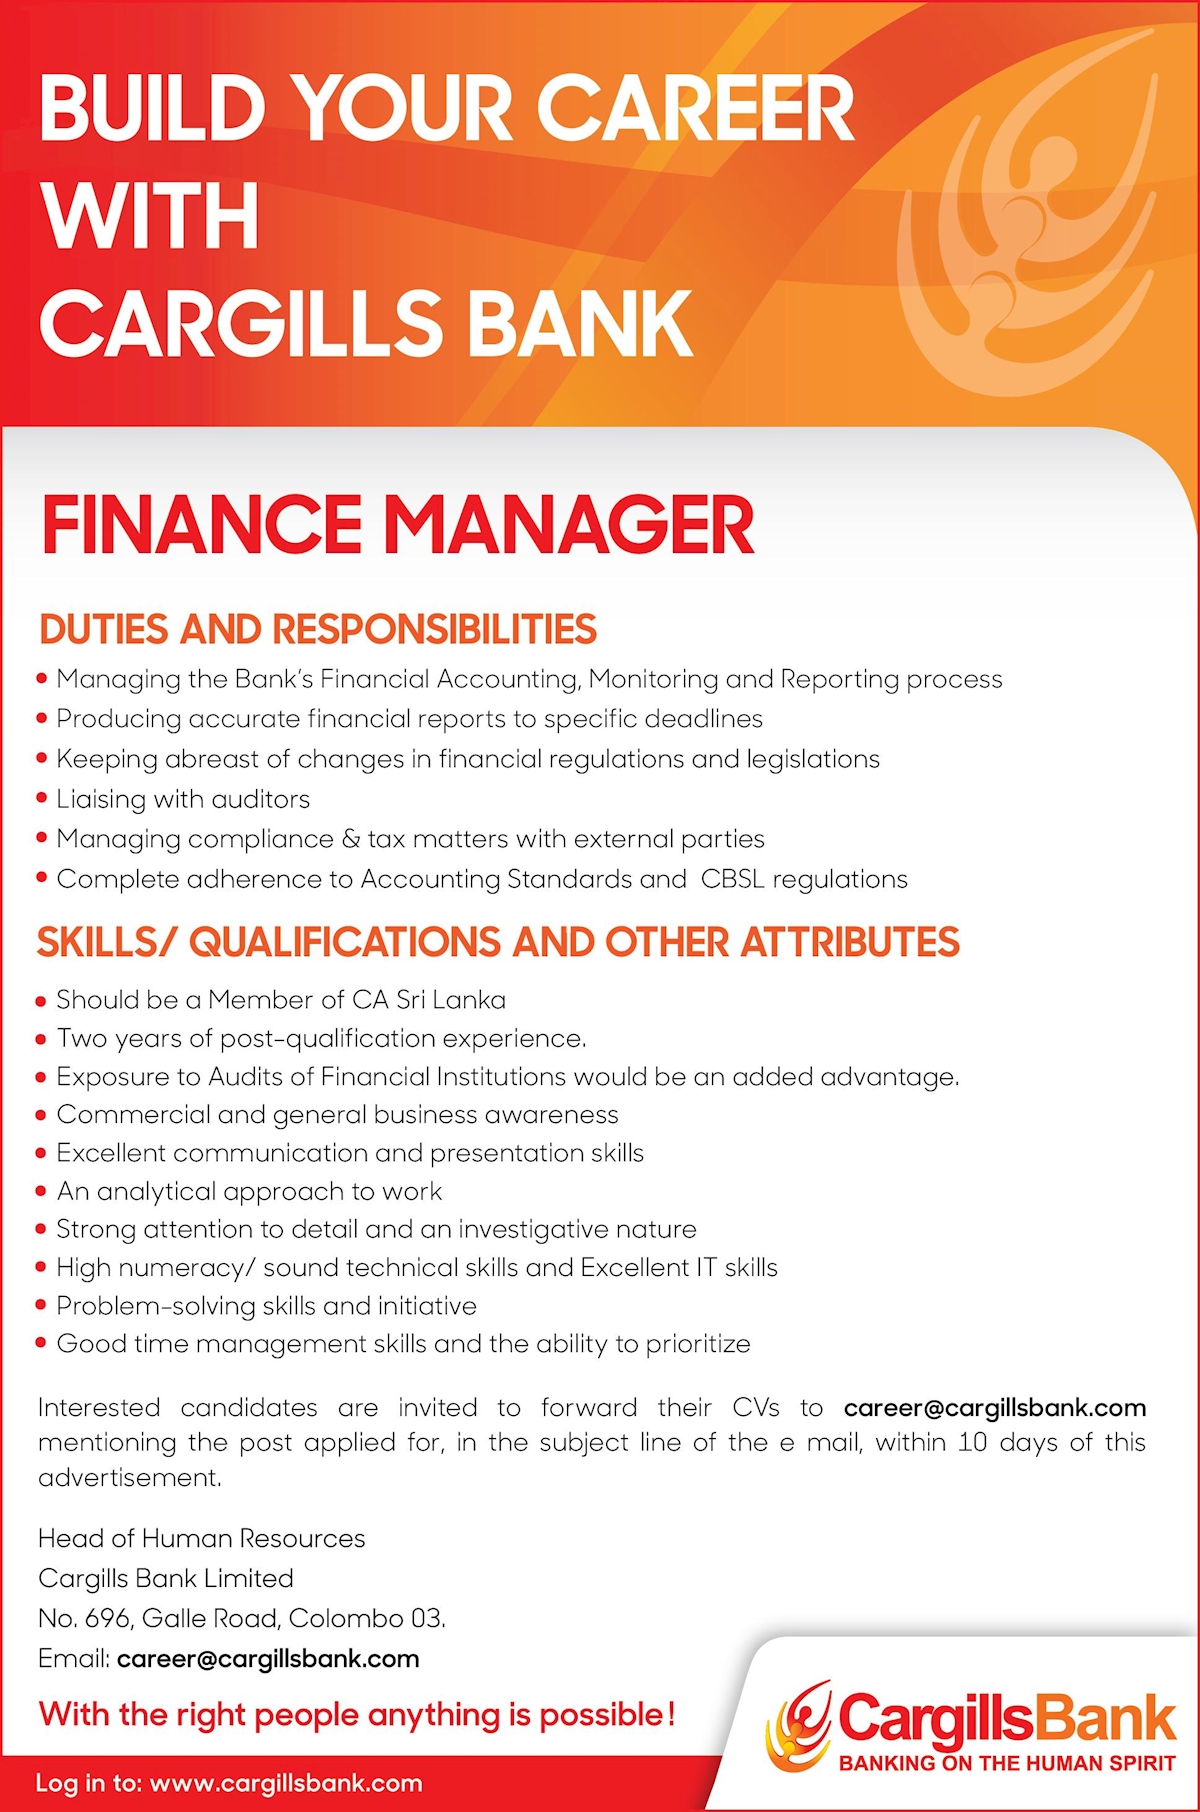 Finance Manager At Cargills Bank